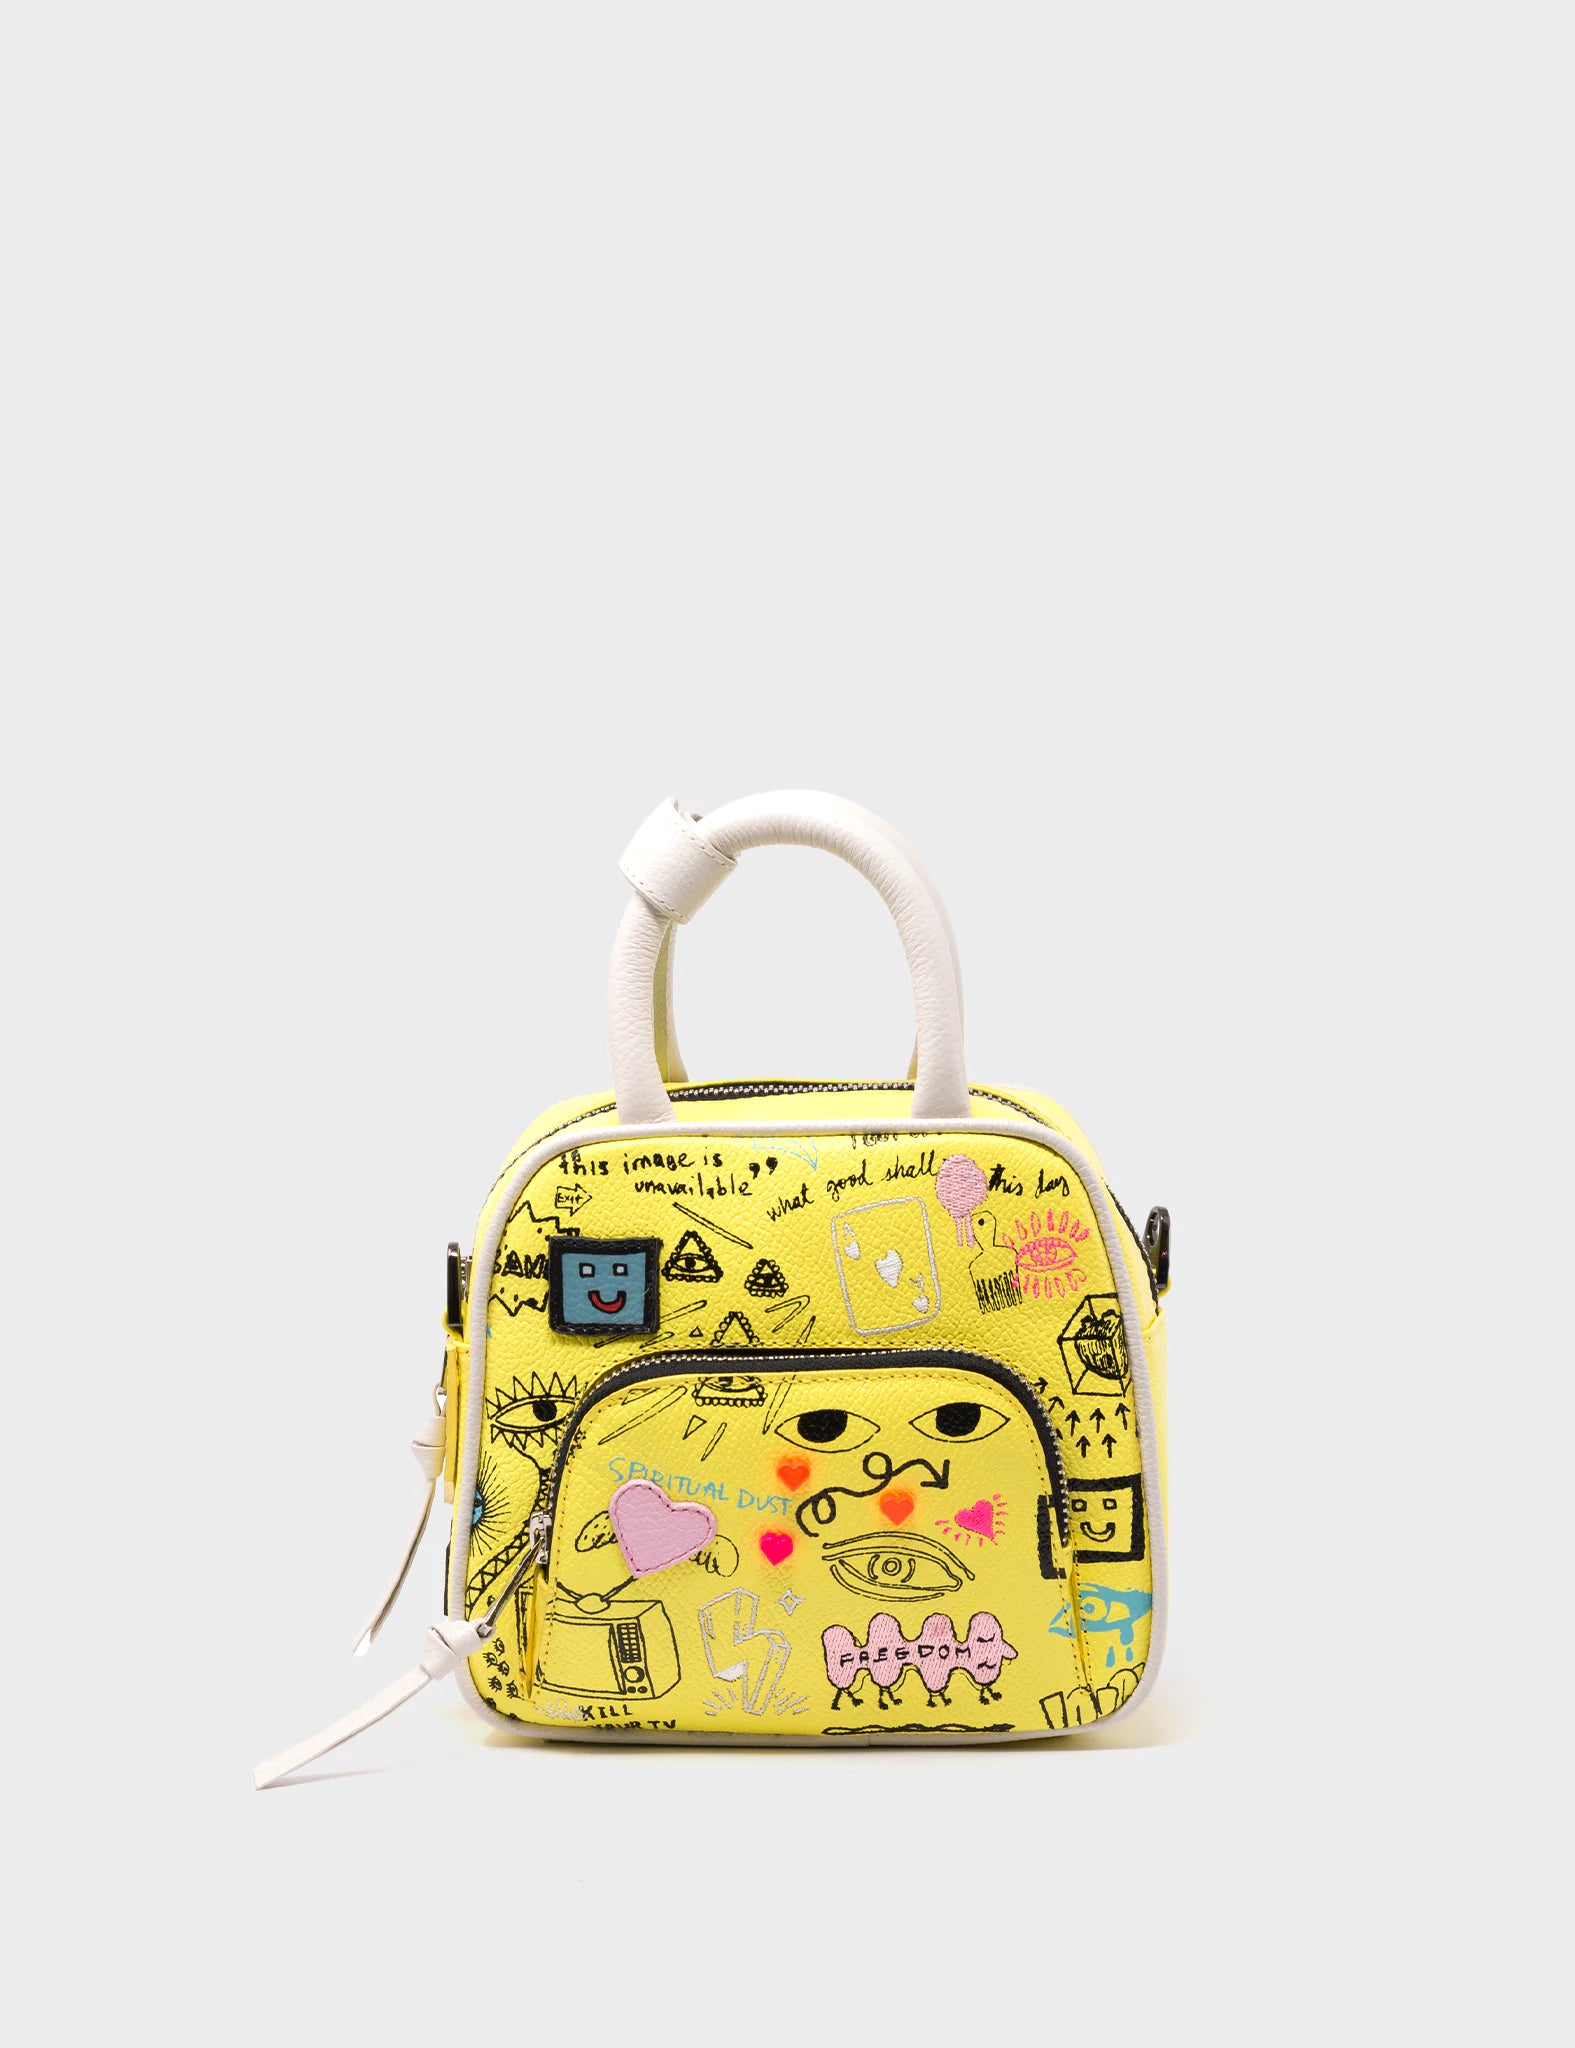 Marino Mini Crossbody Yellow Leather Bag - Graffiti Print - Front View